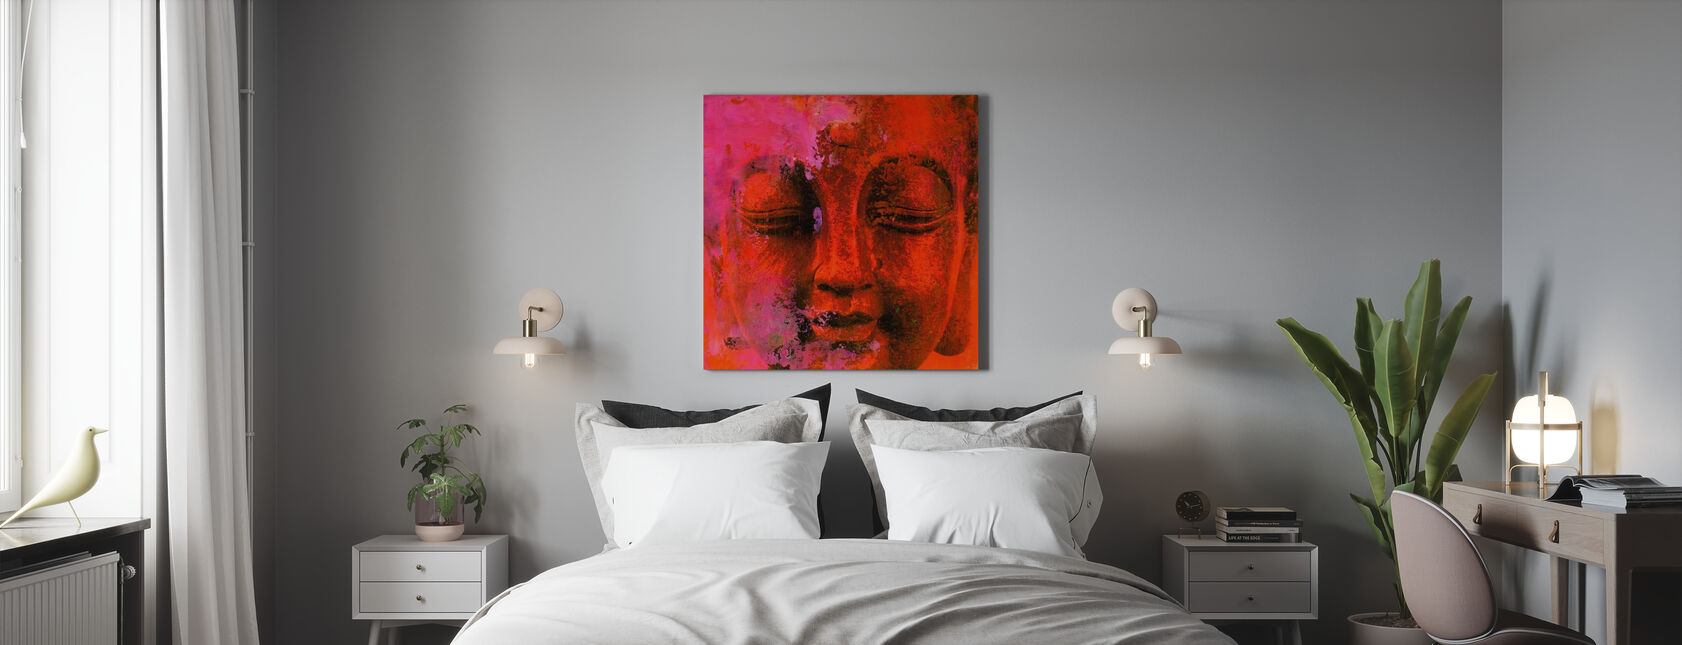 Red Buddha - Canvas print - Bedroom